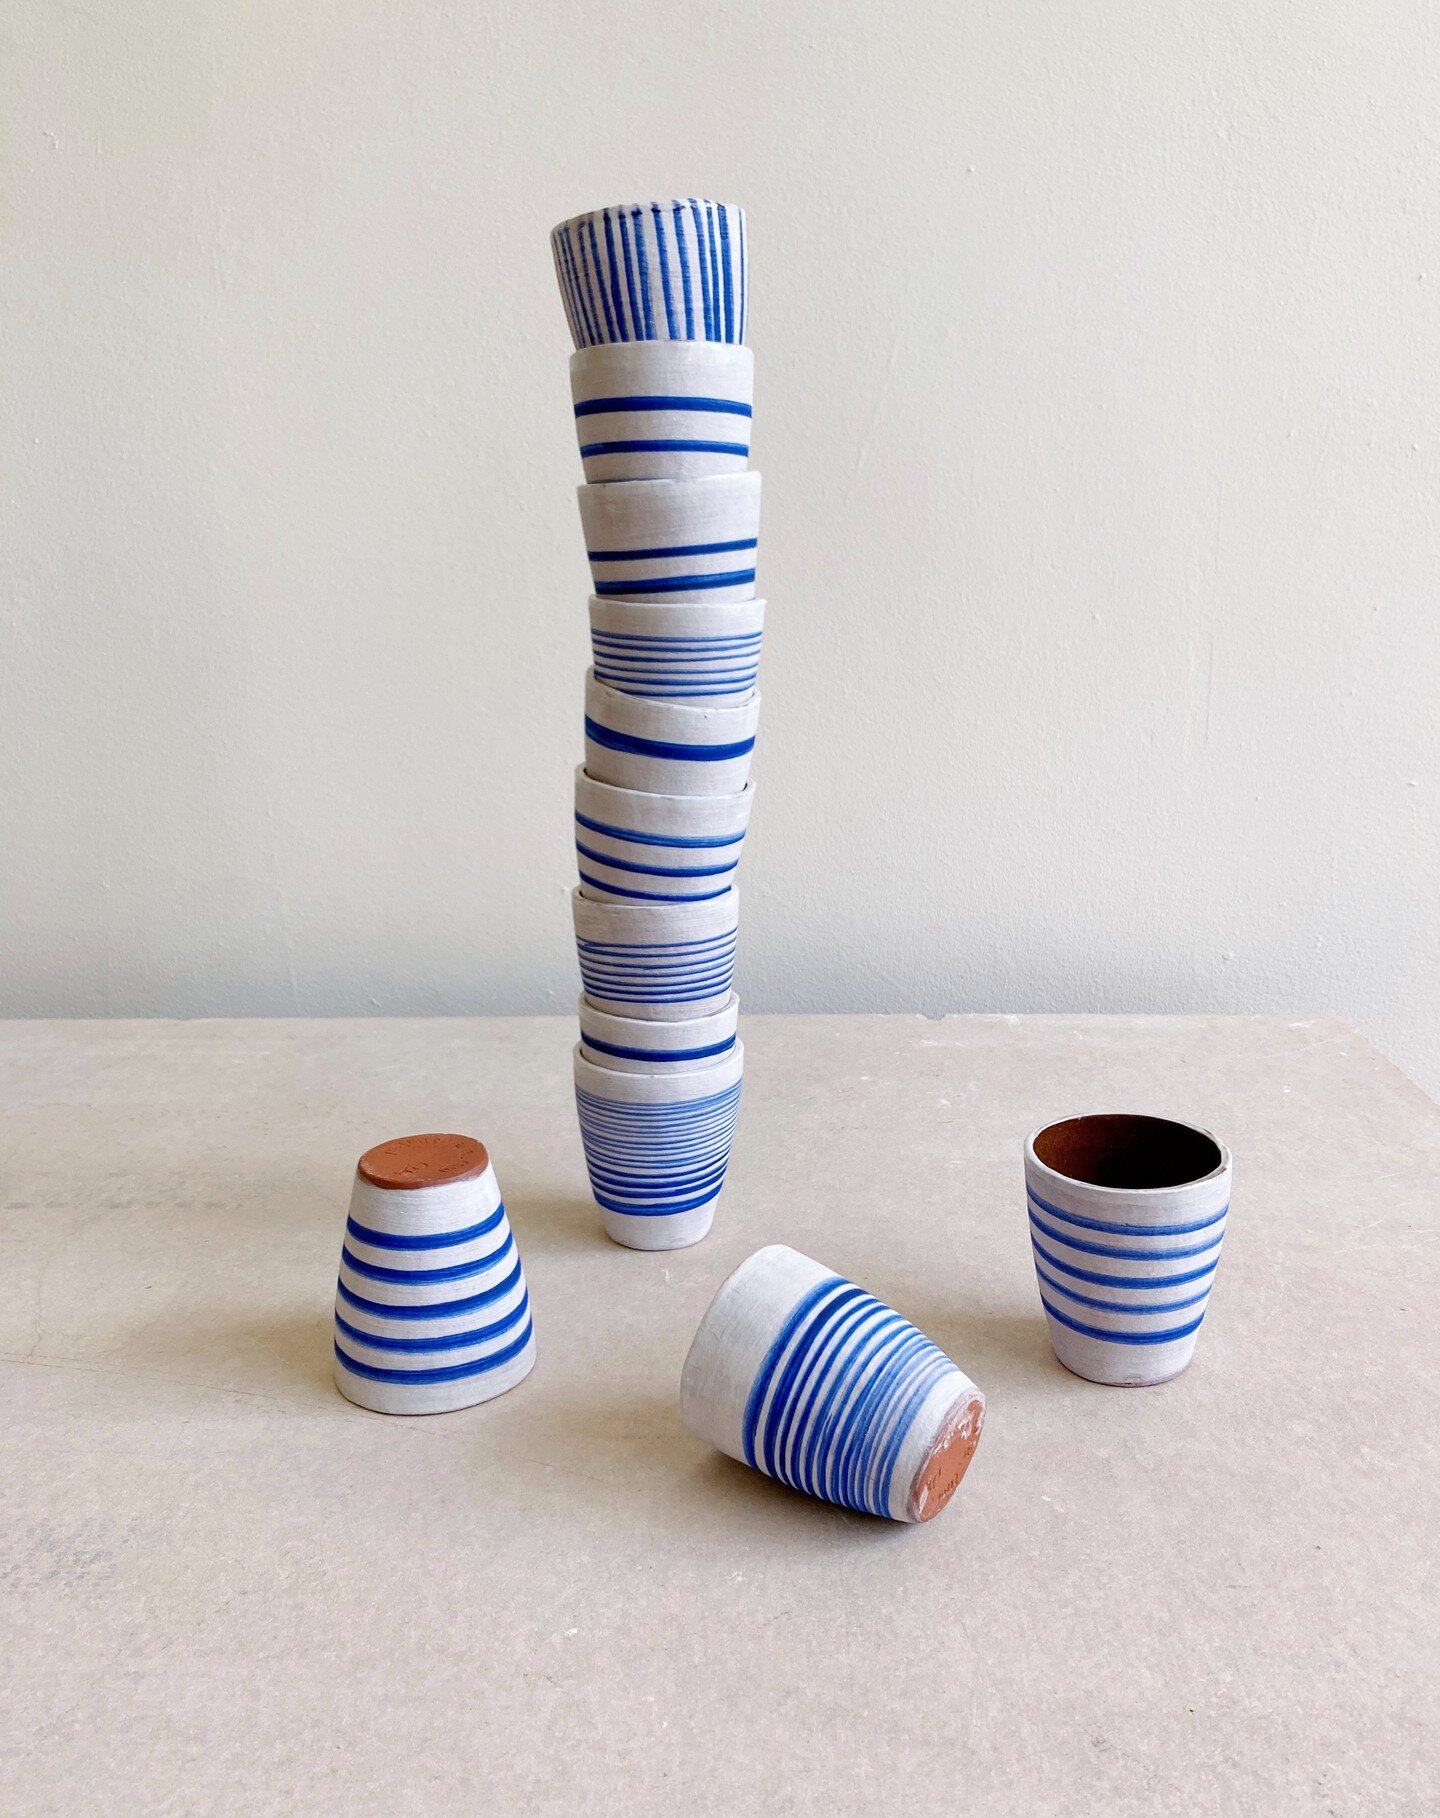 aegean blue kras&iacute; cups now available in the shop! ready to ship 8.2.22 
+ happy leo season! 
.
.
.
#krasi #winecup #ceramiccup #ceramic #ceramics #stoneware #cup #tumbler #vino #carnevale365 #itsleoseason #bluecup #coffeecup #blue #aegeanblue 